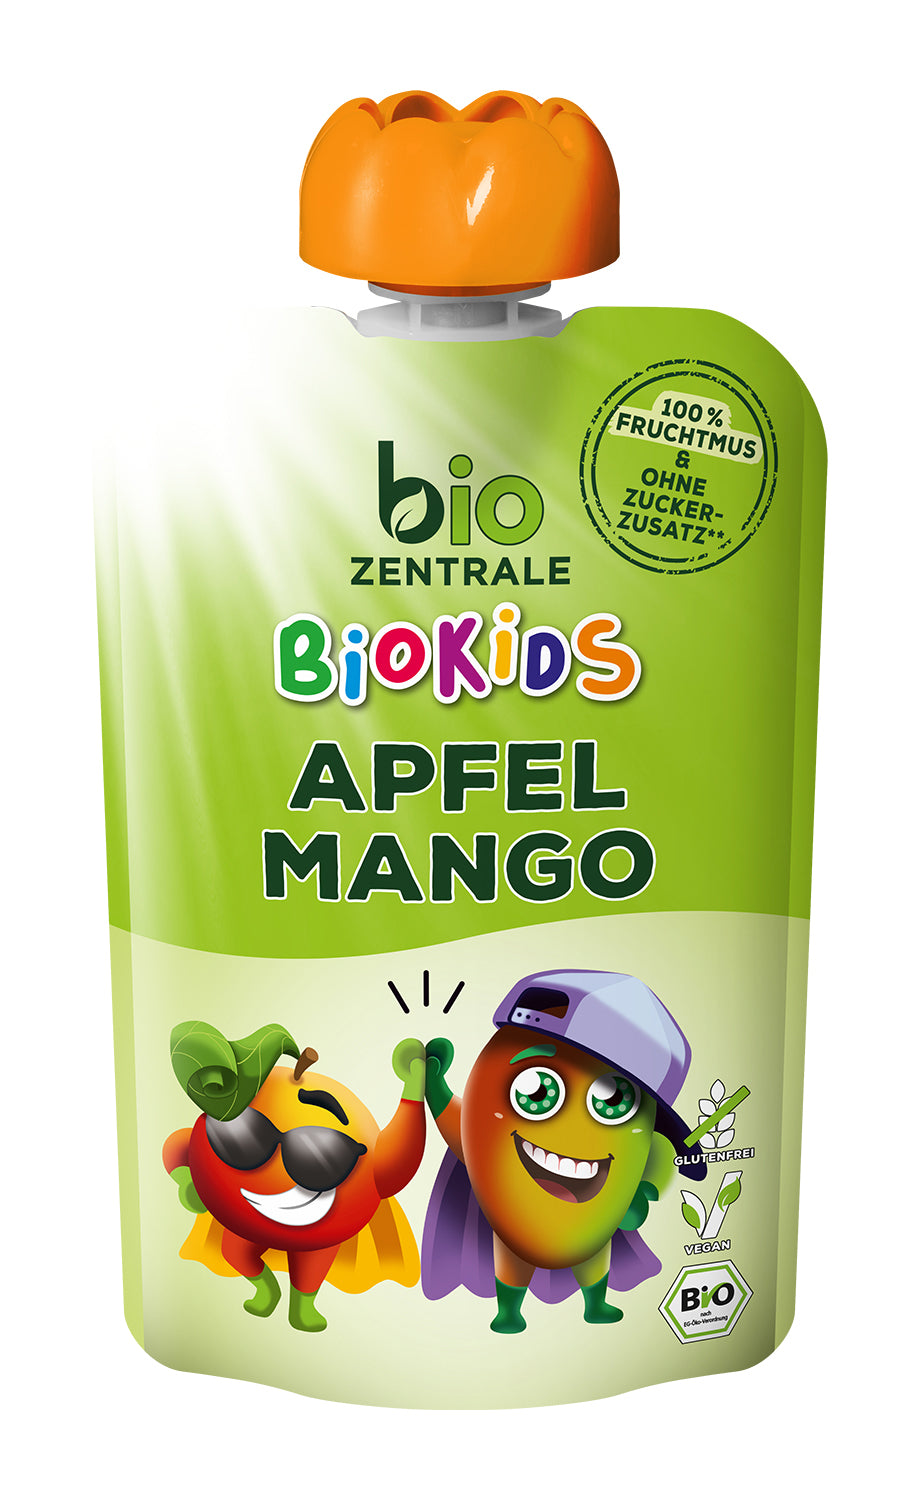 BioKids Fruchtmus Apfel Mango